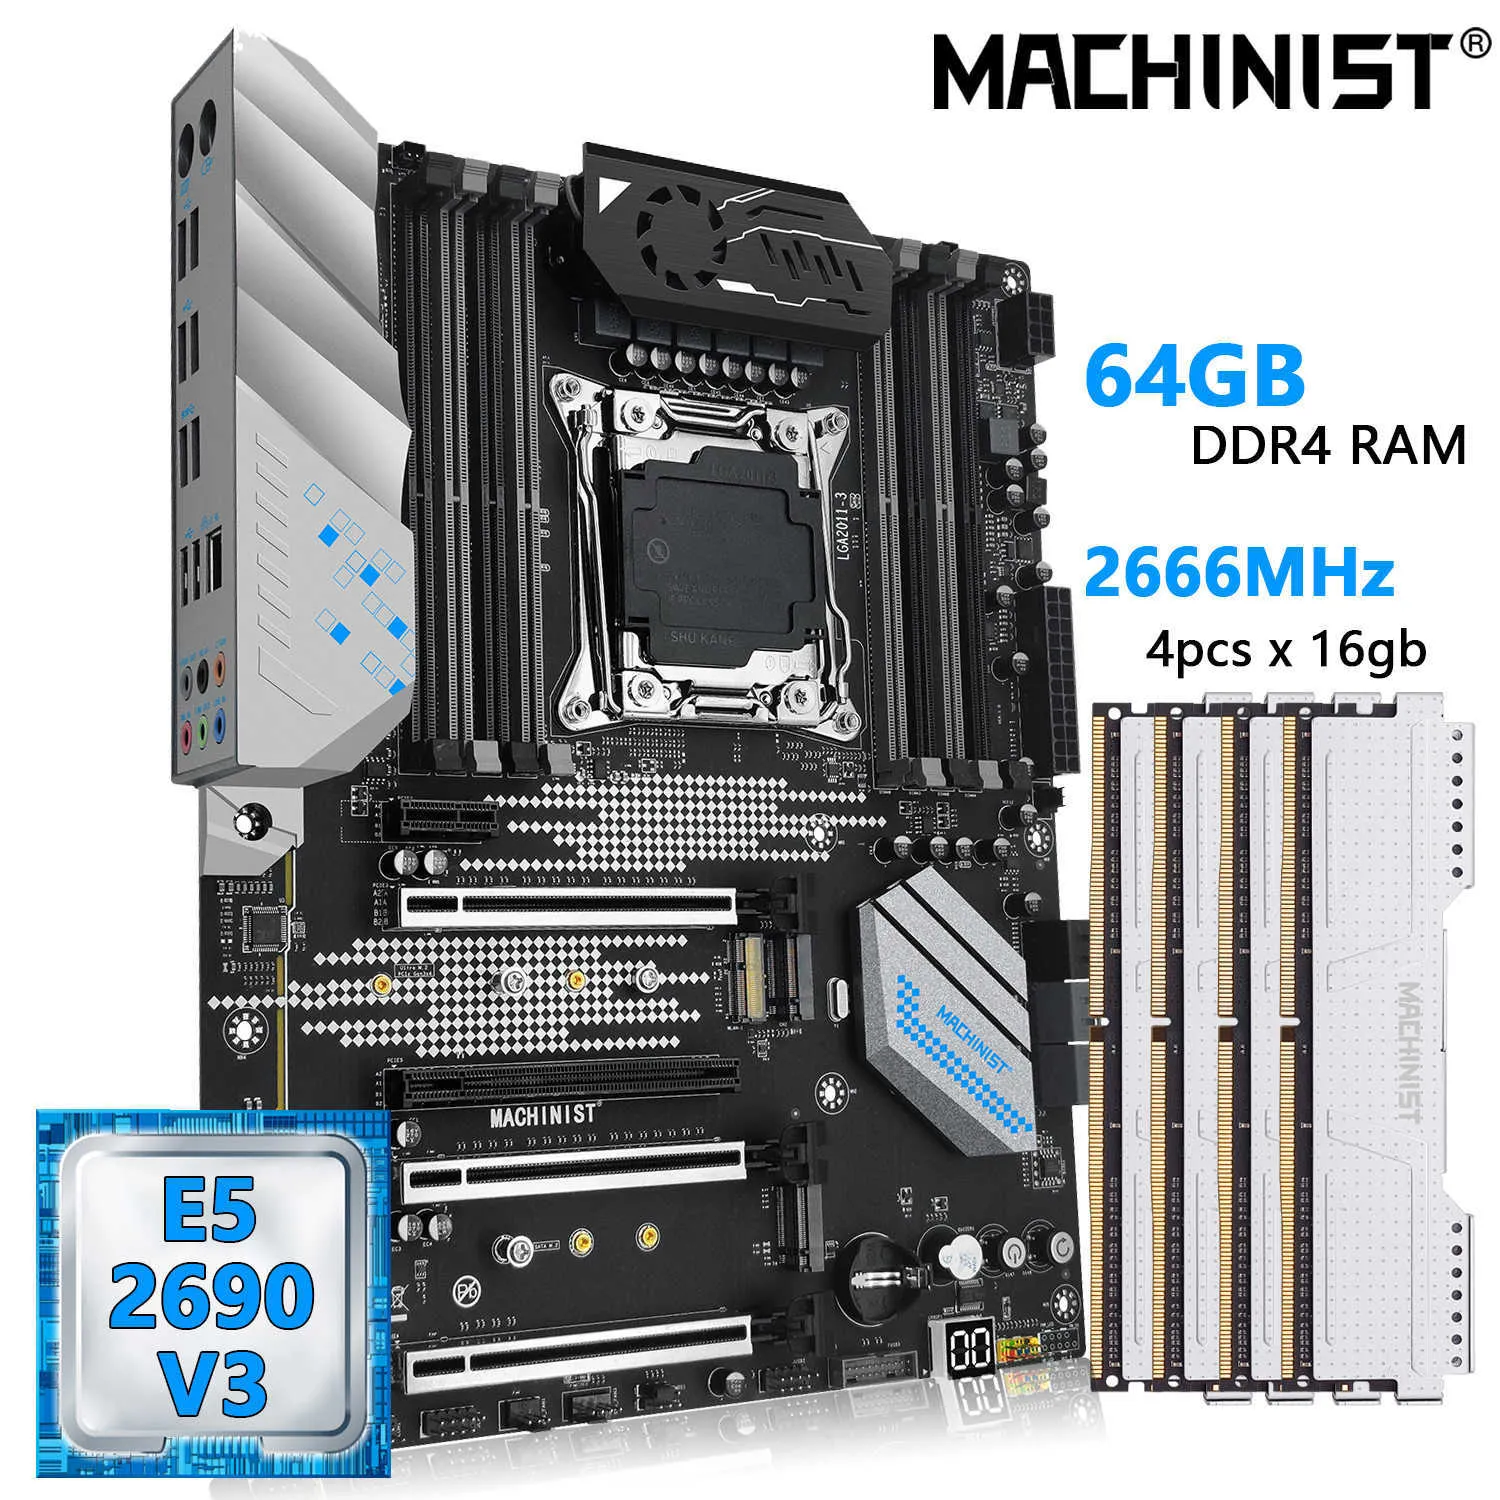 Machinista X99 LGA 2011-3 Kit combinado de placa base con Intel Xeon E5 2690 V3 CPU y DDR4 64GB RAM Memoria ATX X99 MR9S